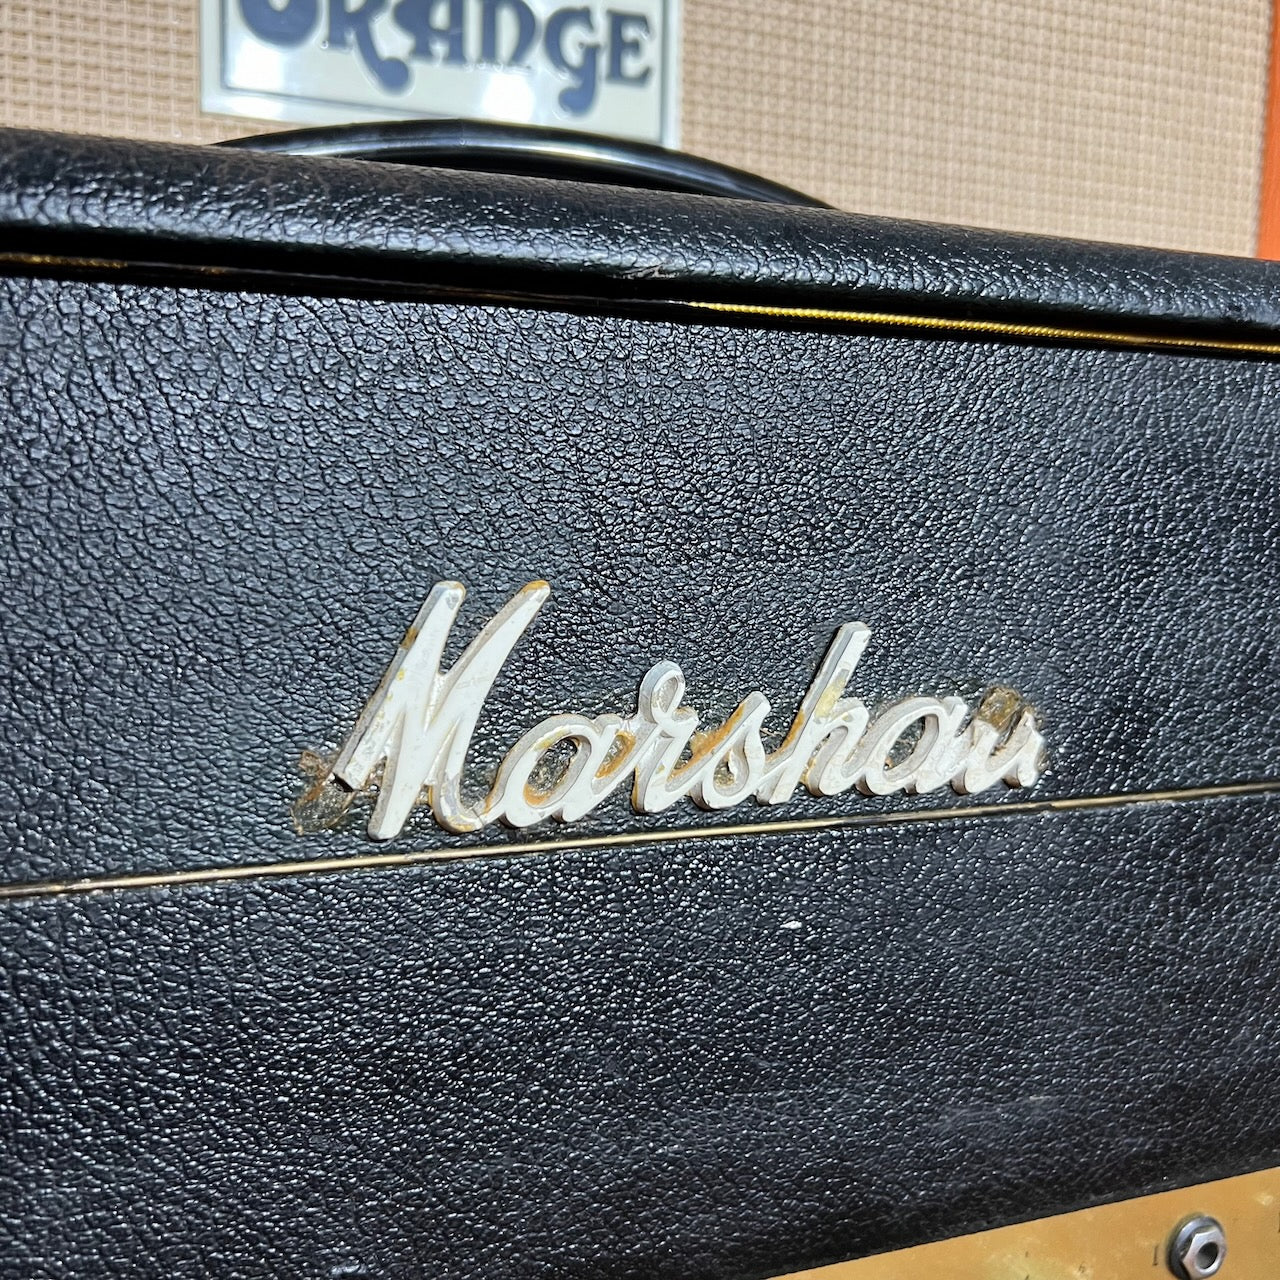 Vintage 1968 Marshall JMP 100w Super PA Amplifier Head